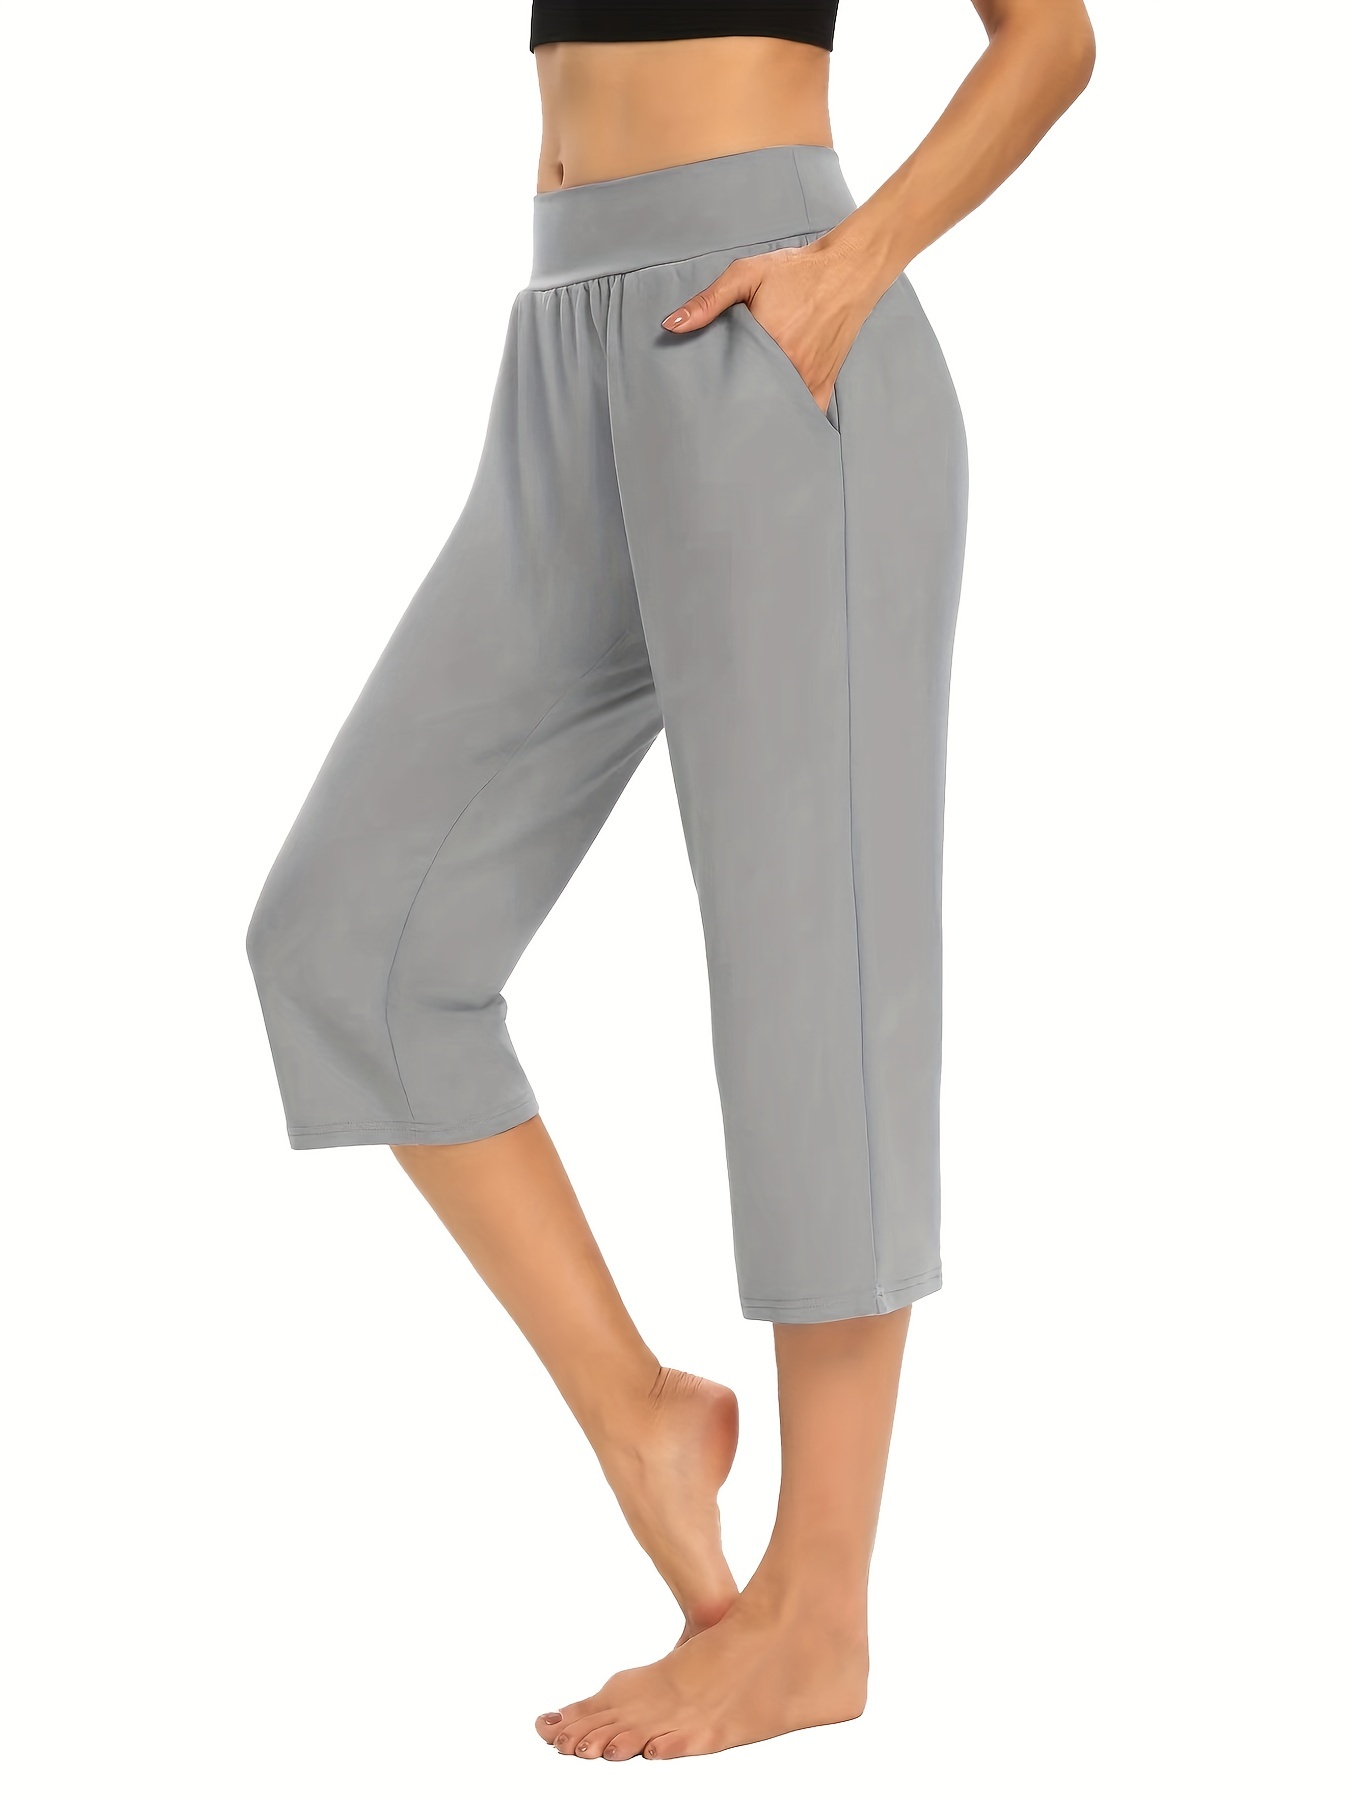 KIHOUT Pants For Women Deals Summer Casual Loose Pockest Elastic Waist  Solid Trousers Capris Pants 